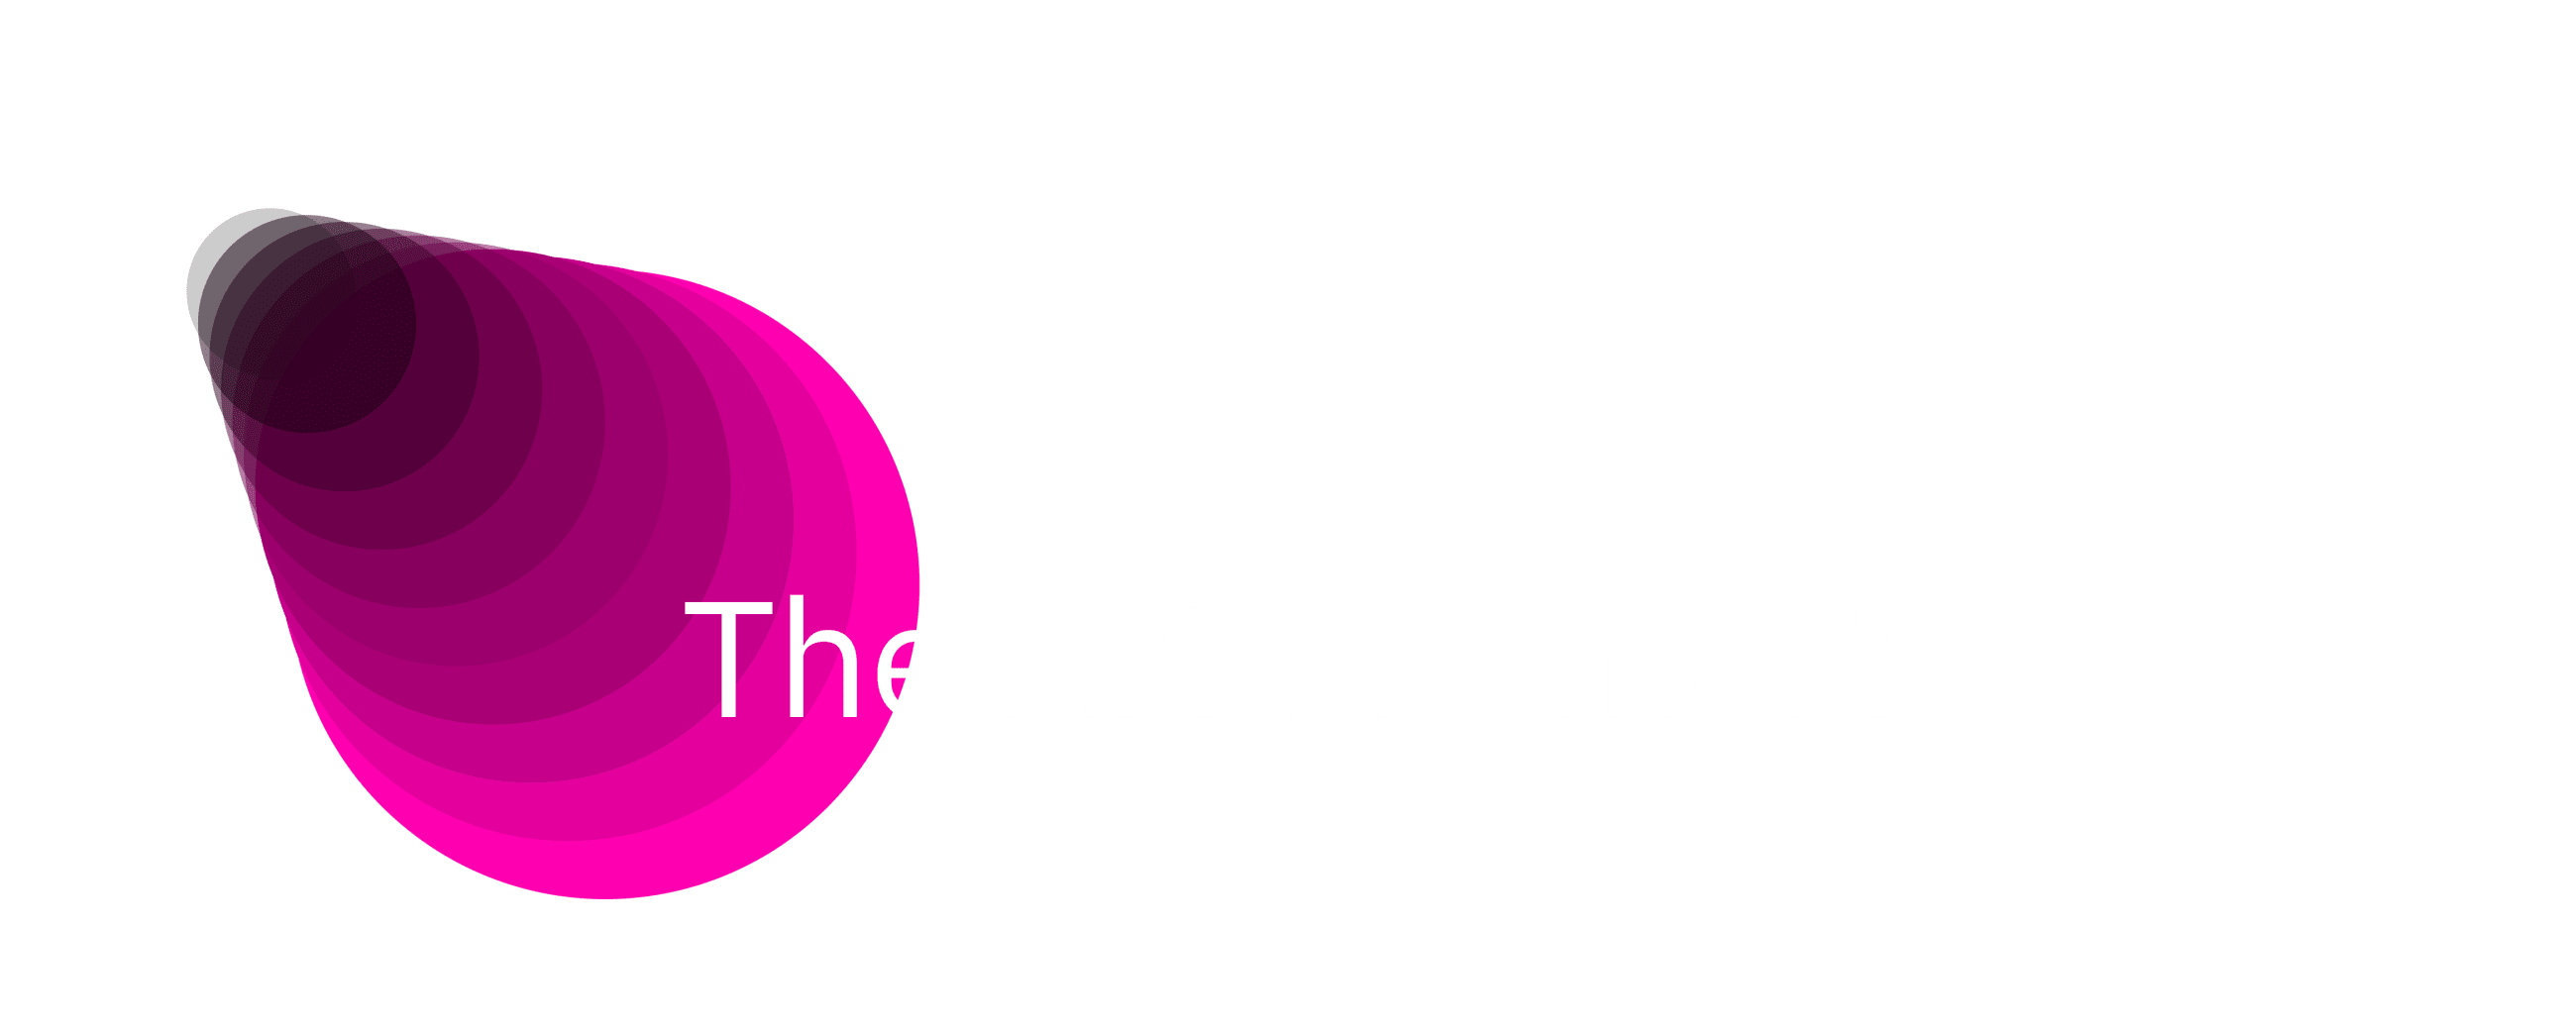 The Art of Smart